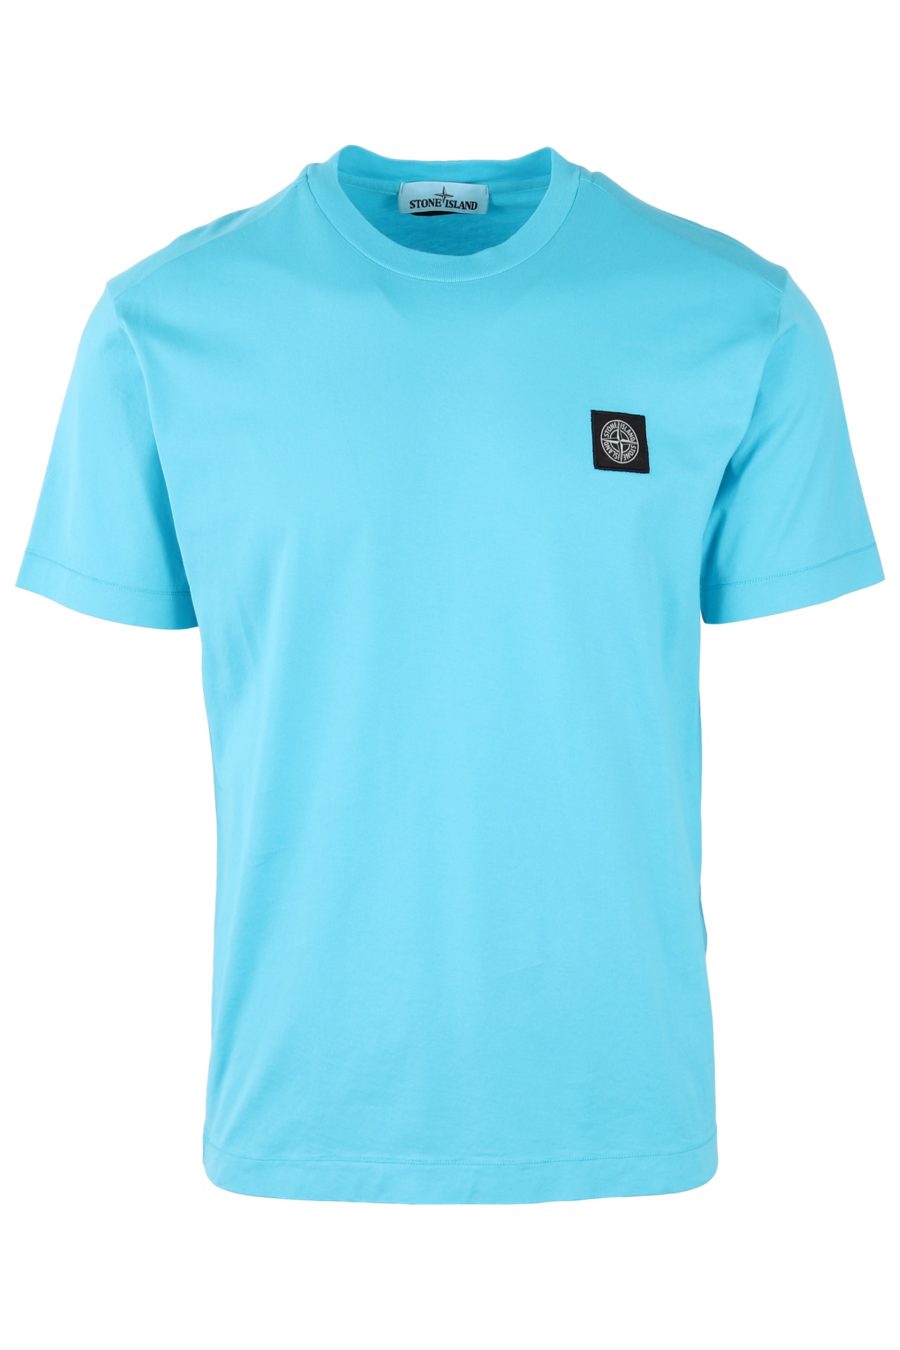 Camiseta Stone Island azul cielo con logo parche - 9b0380ac4d64da533618a003789f595be3bc09b8